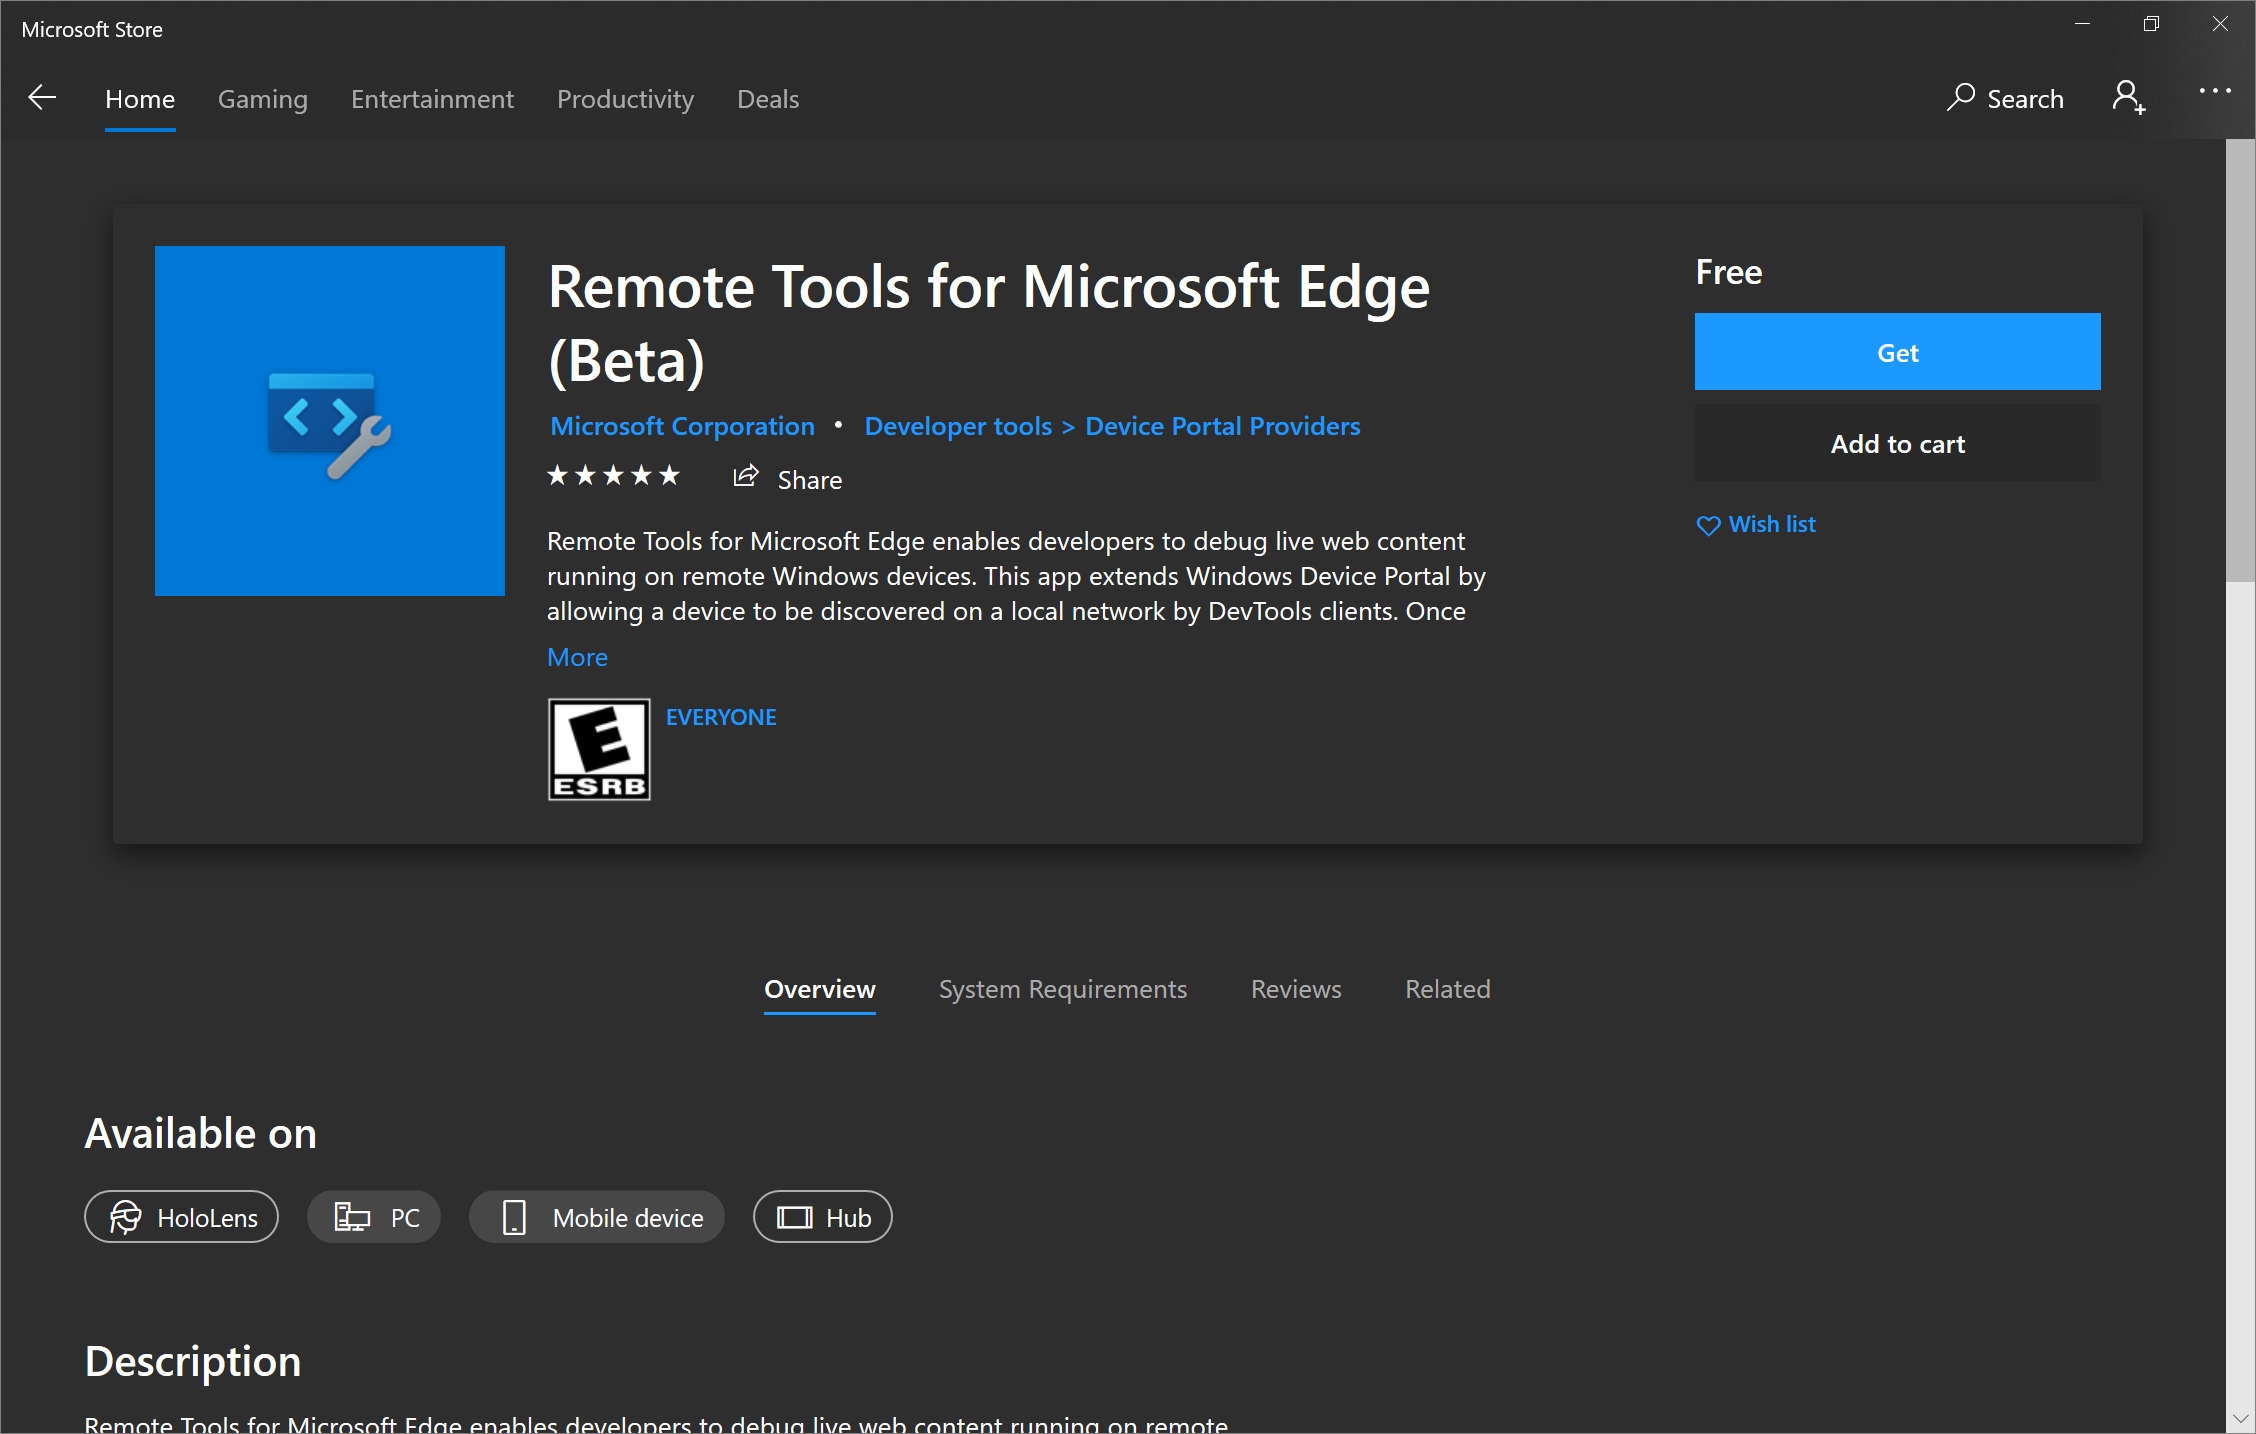 Microsoft Store 中提供的 Microsoft Edge 远程工具 (Beta 版) 应用